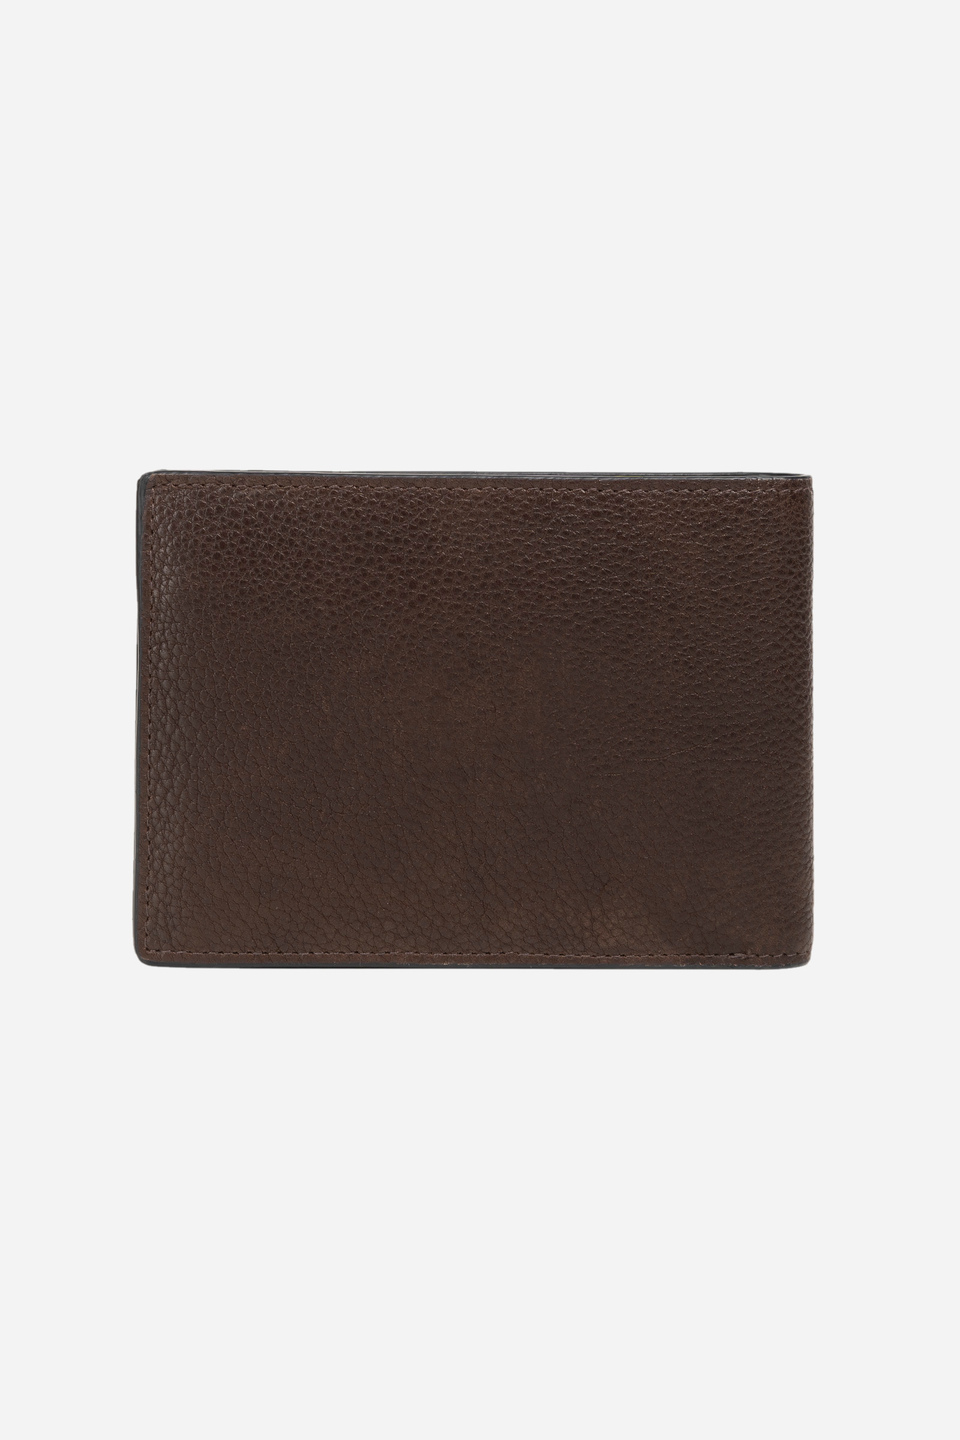 100% Genuine Leather Men Wallet Coin Purse Small Card Holder Pocket | eBay